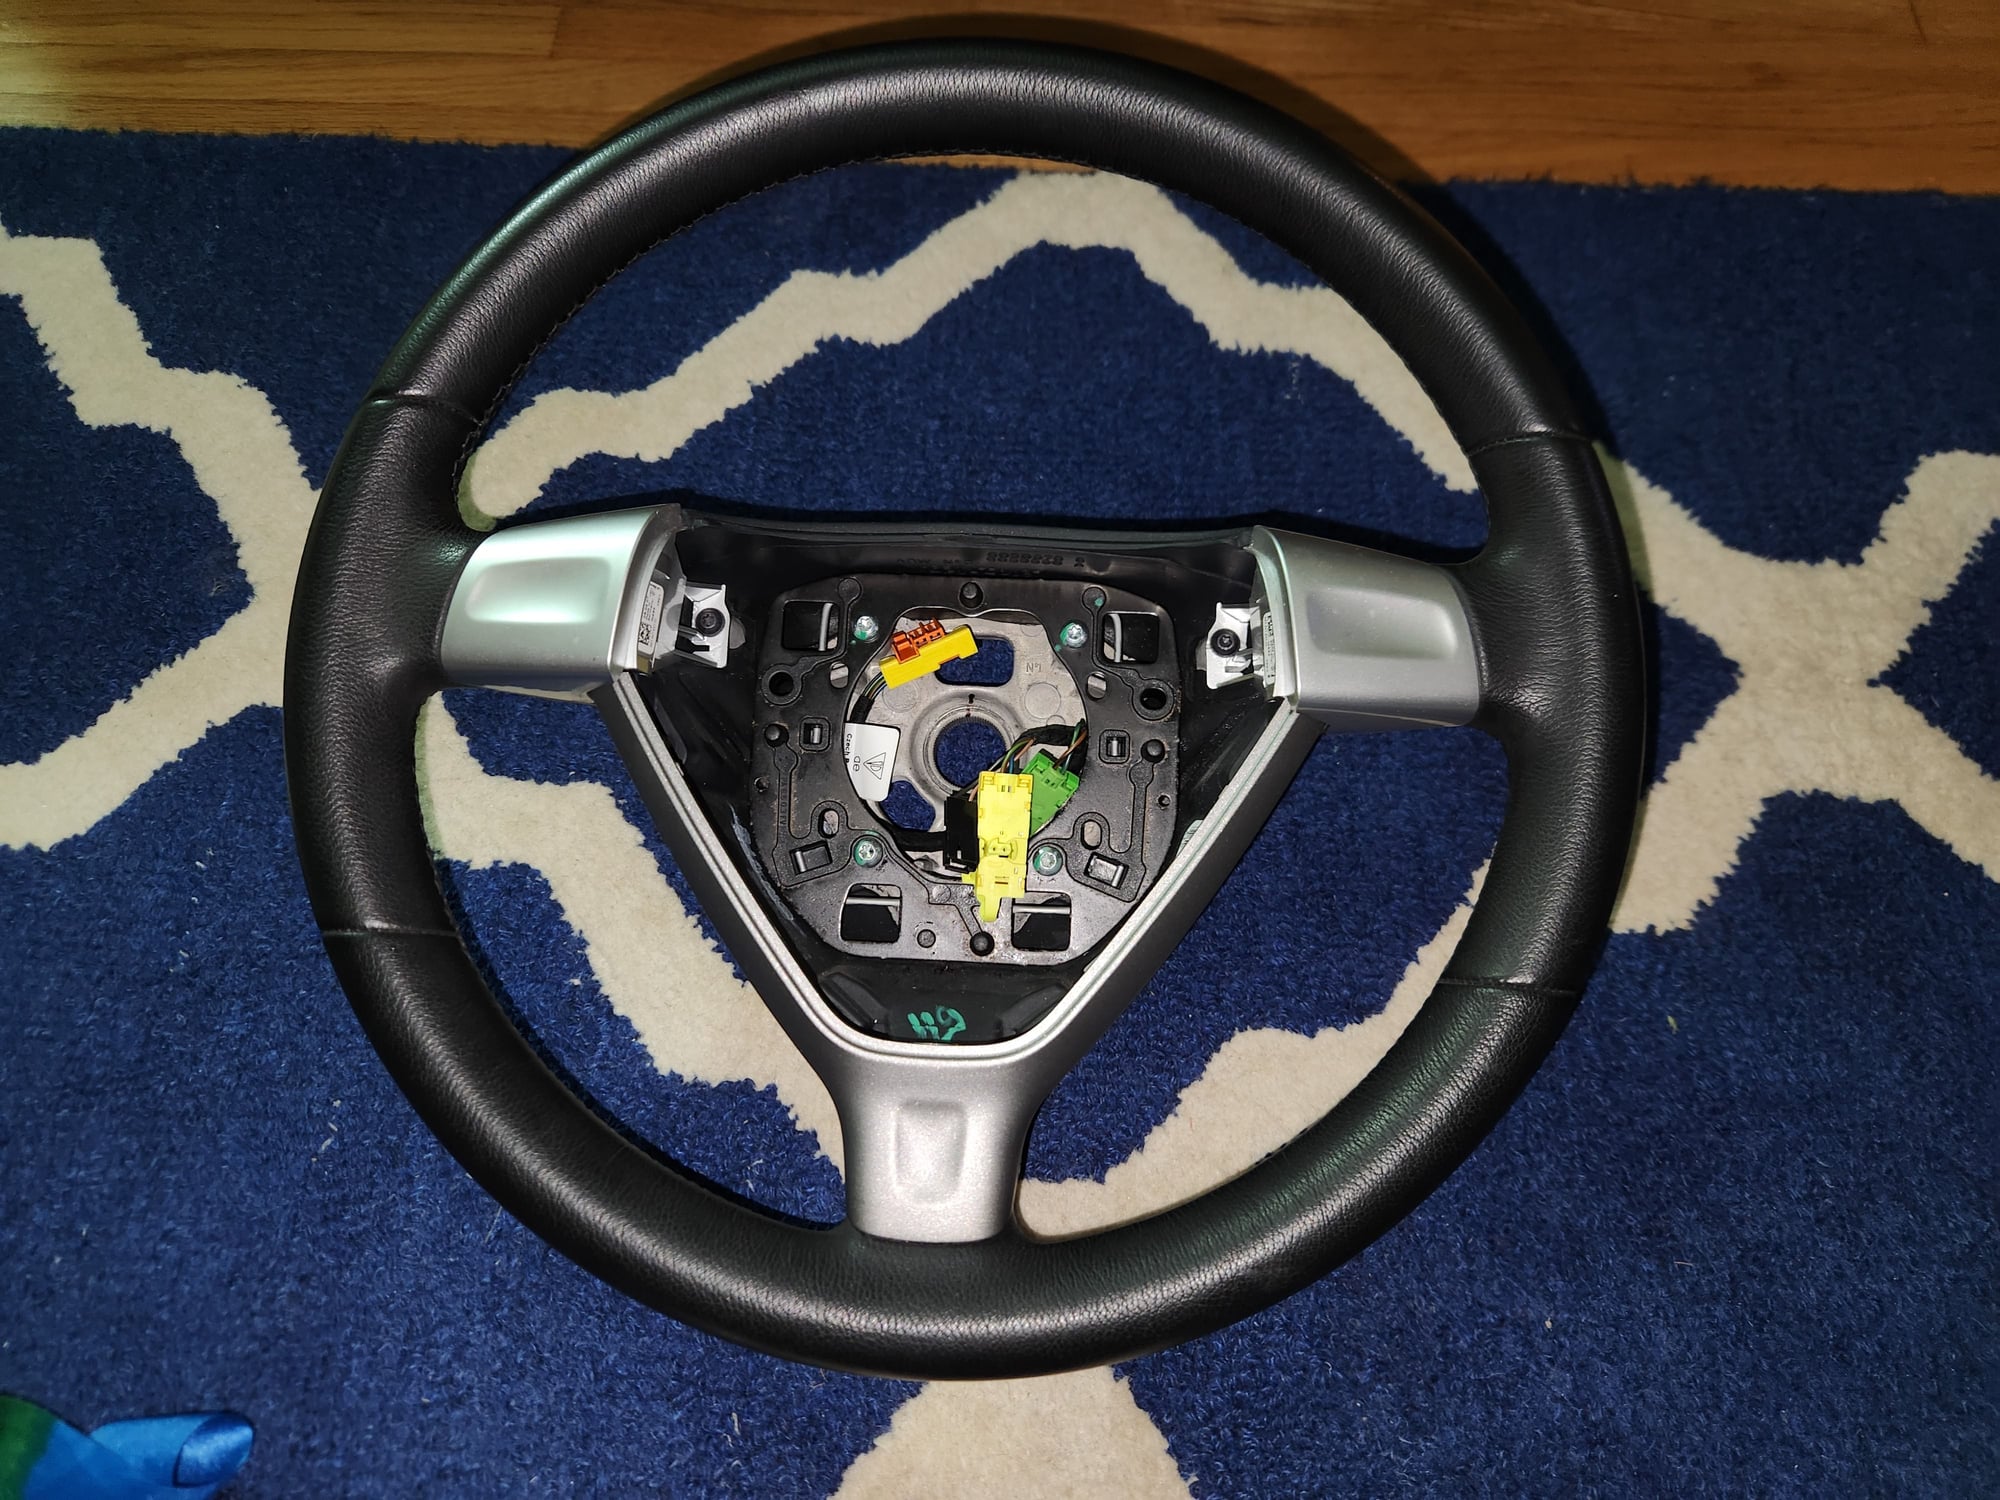 Steering/Suspension - 987/997 Non-Multifunction Steering Wheel and Airbag - Used - All Years  All Models - Oak Ridge, NJ 07438, United States